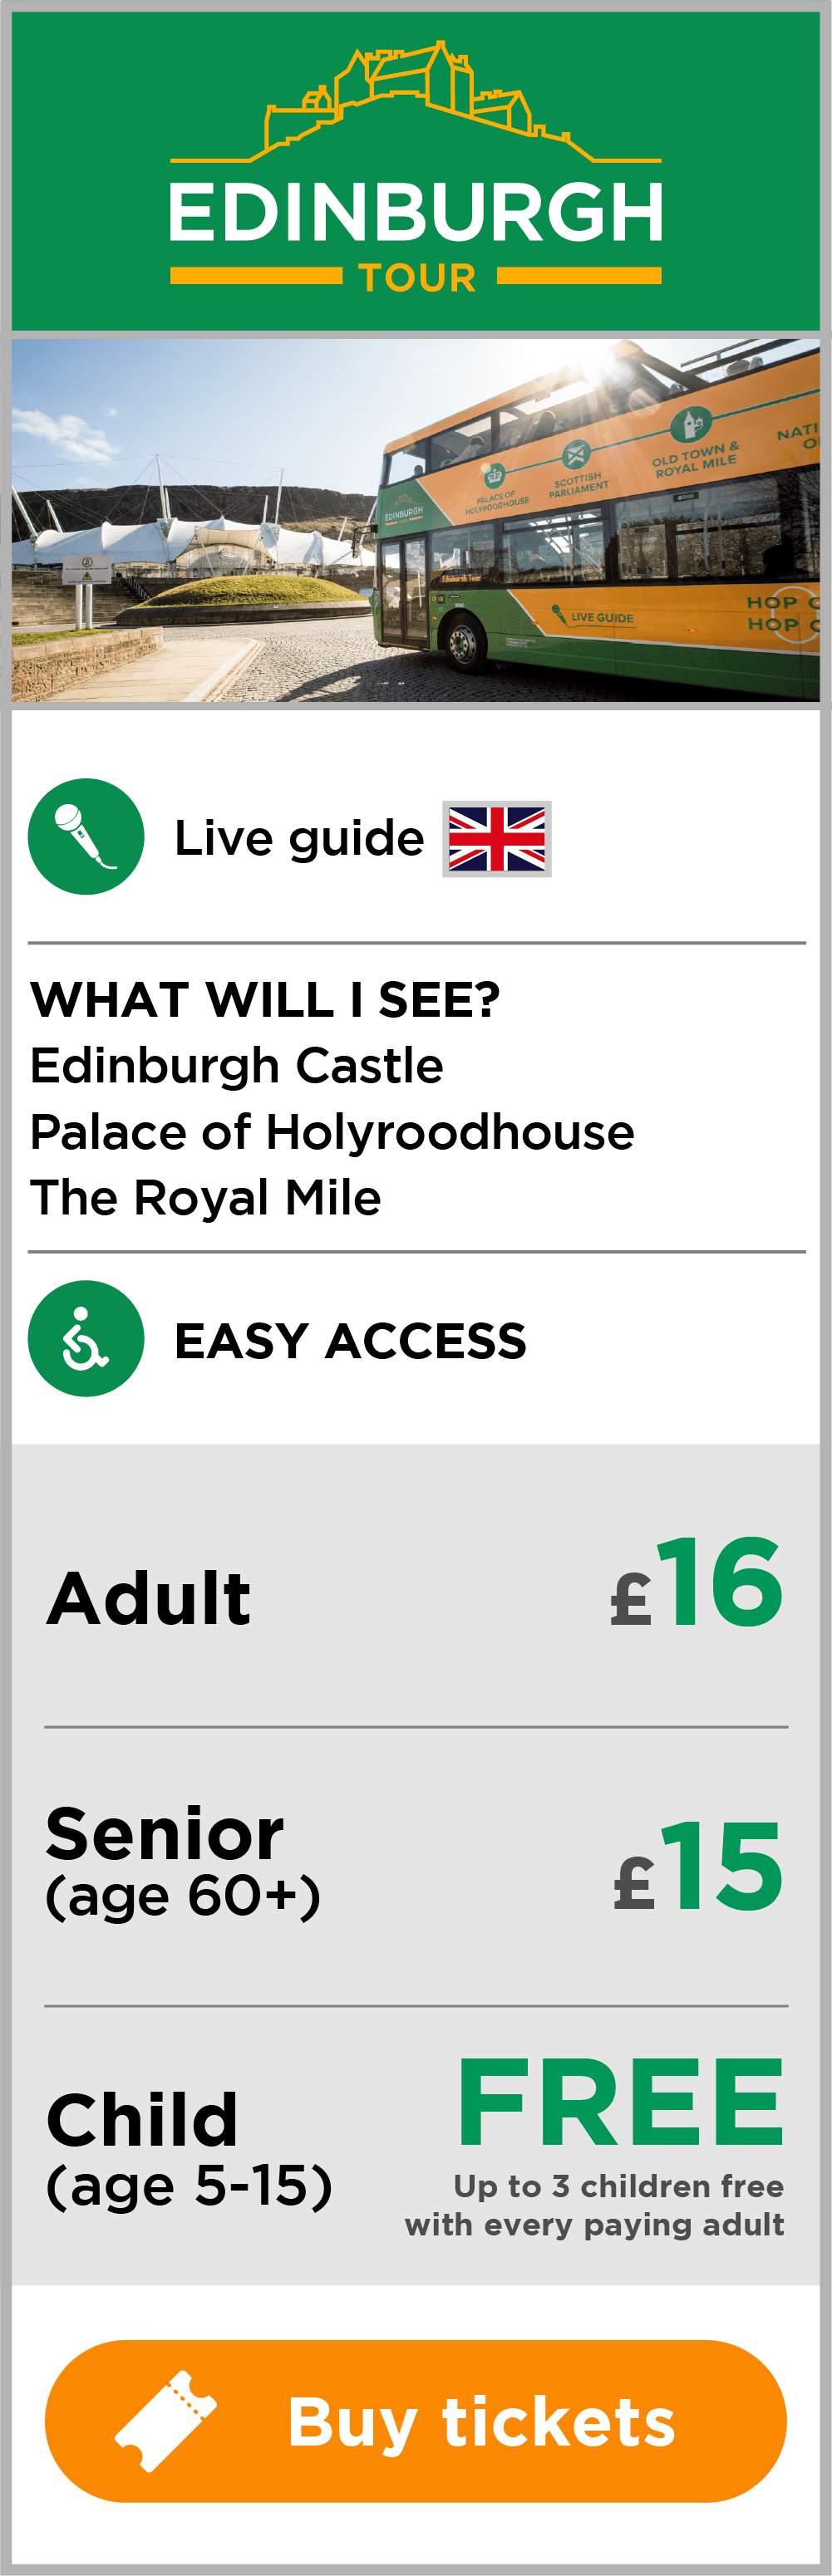 Edinburgh Tour includes Edinburgh Castle Palace of Holyroodhouse The Royal Mile. £16 adult and £15 senior ticket.